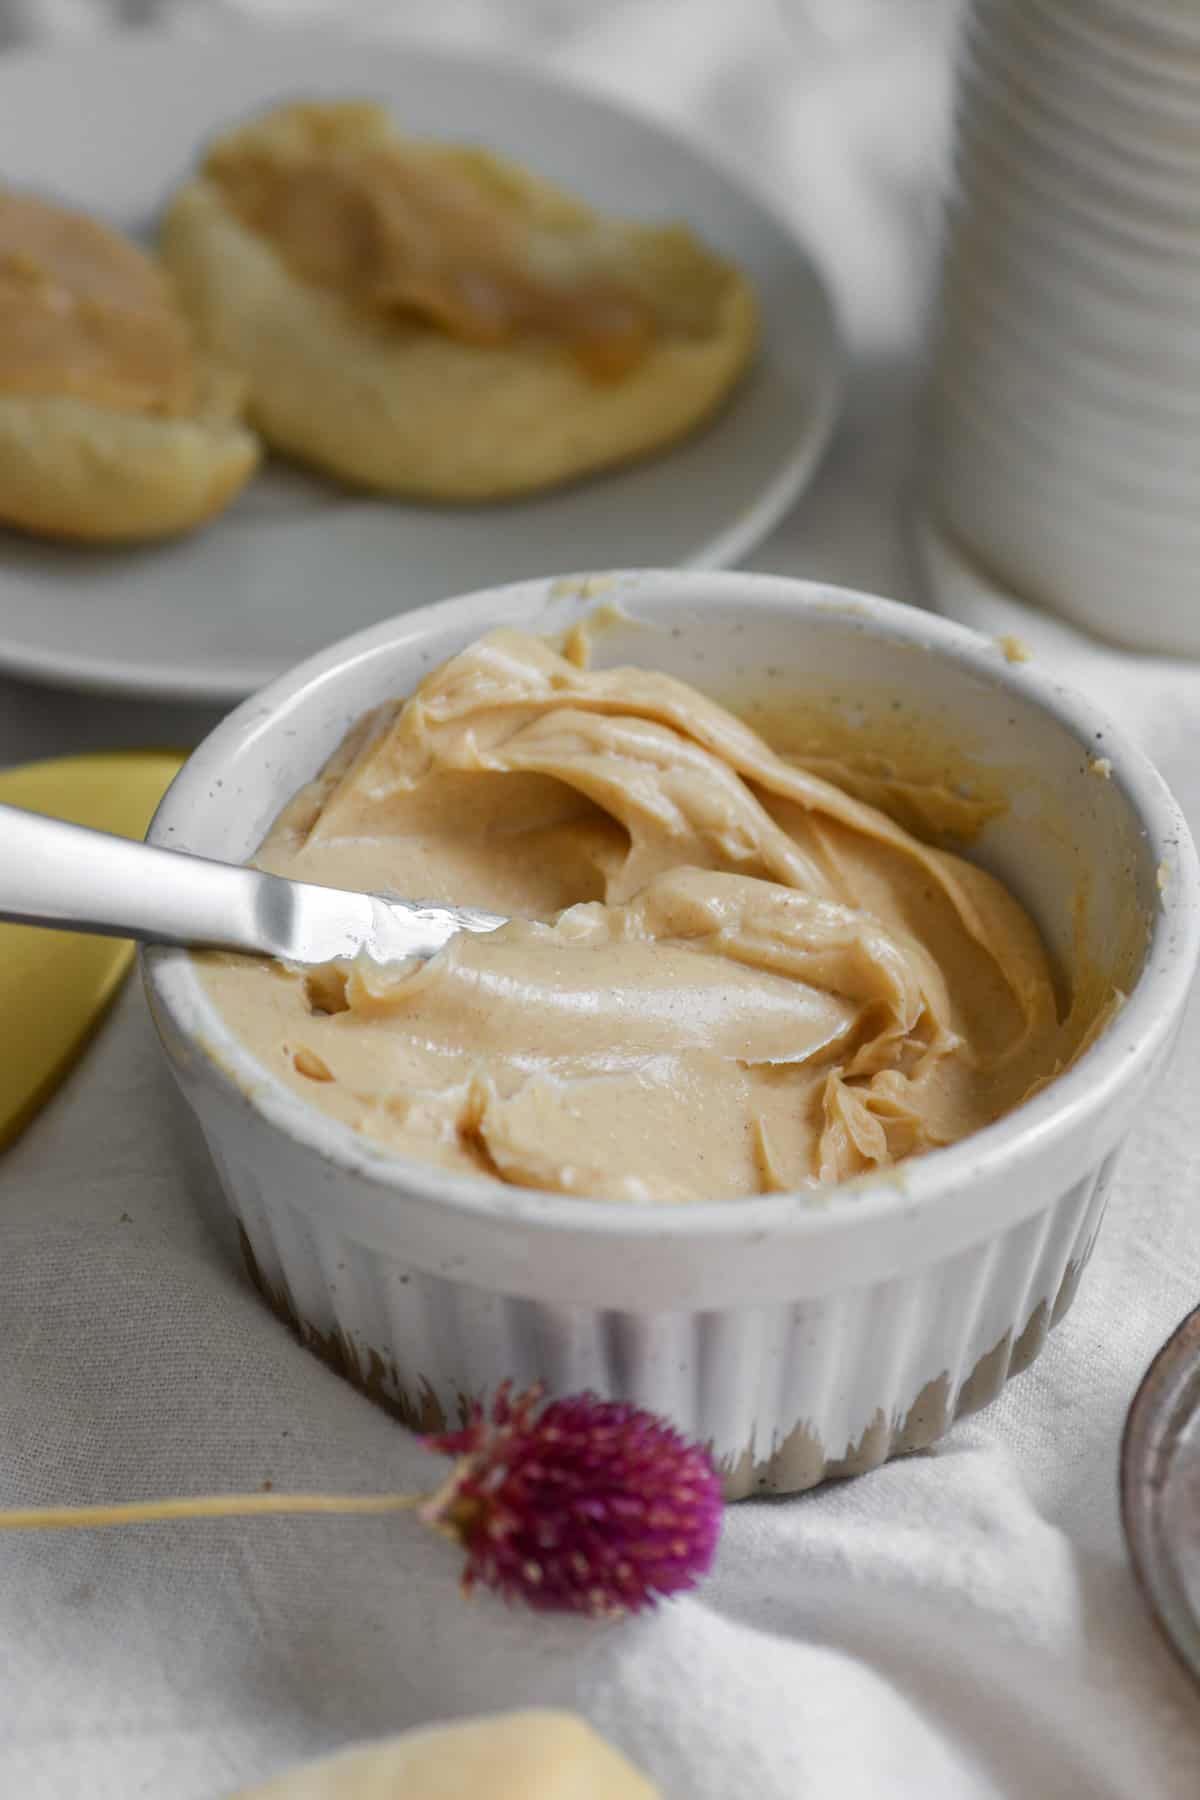 Vegan Cinnamon Butter Recipe – Creamy & Sweet Spread